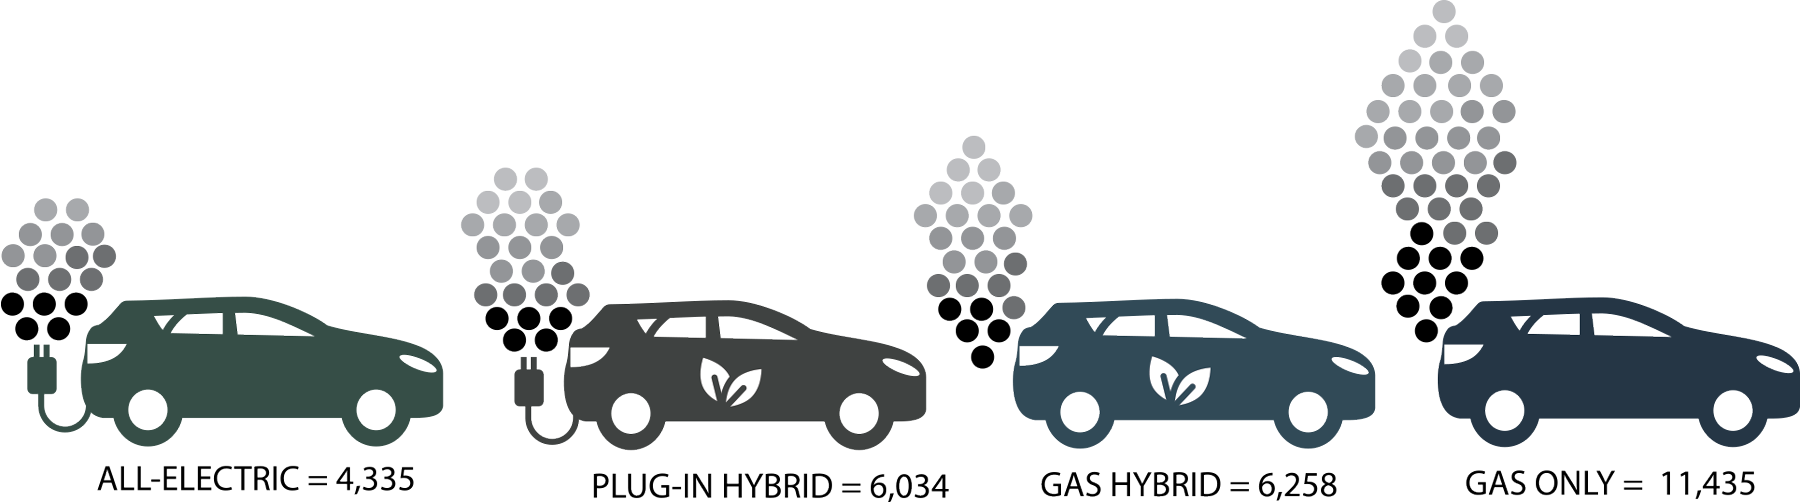 digital illustration of different emissions for vehicles